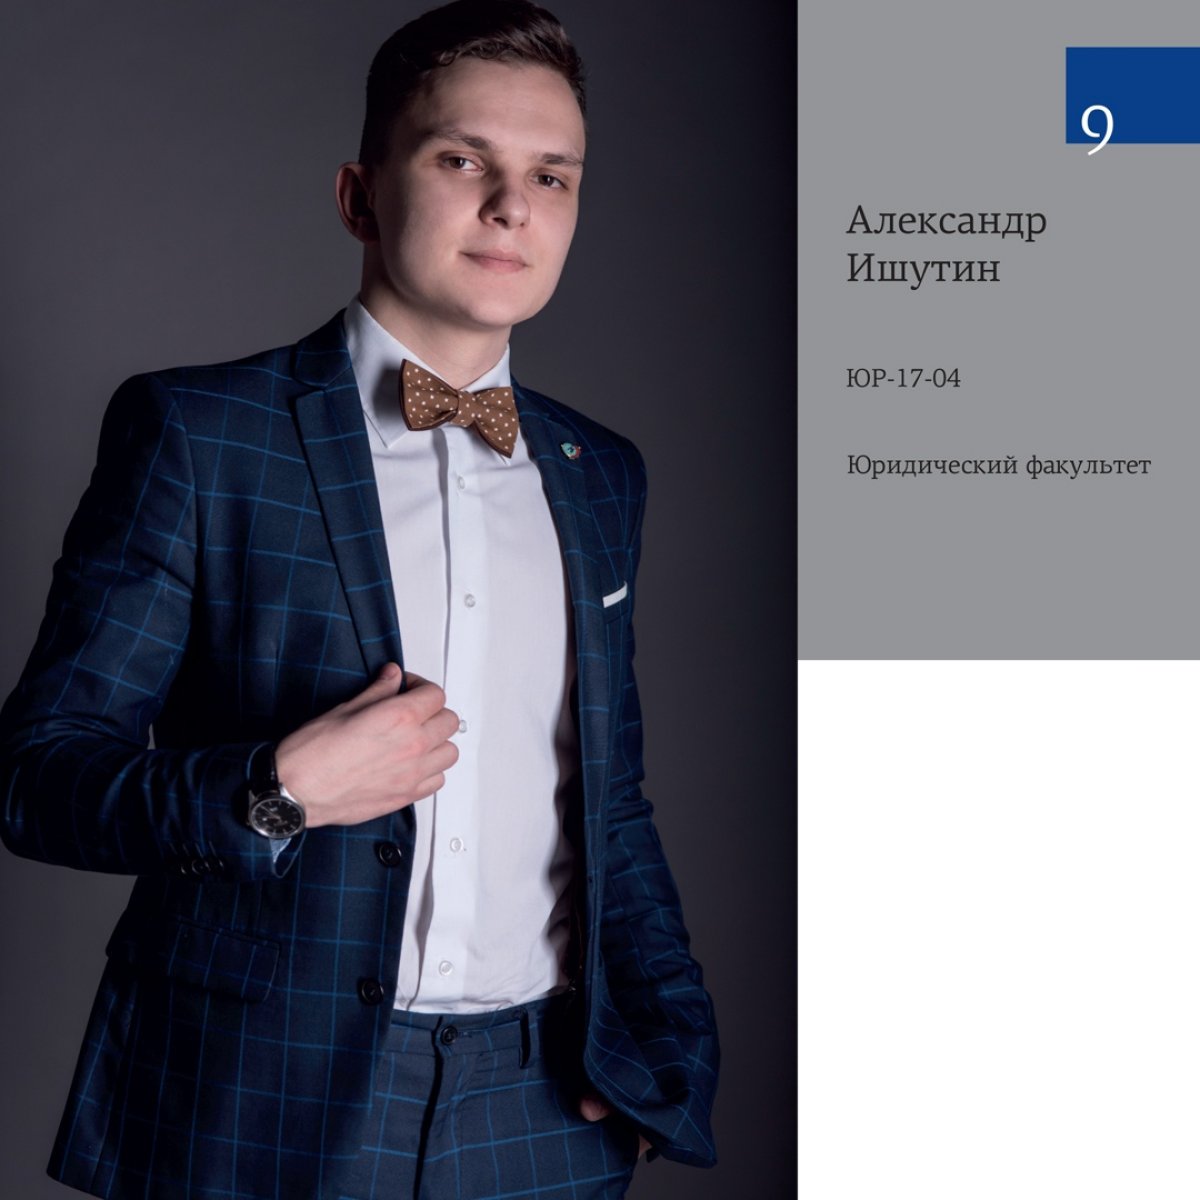 . Участник №9 - Александр Ишутин.